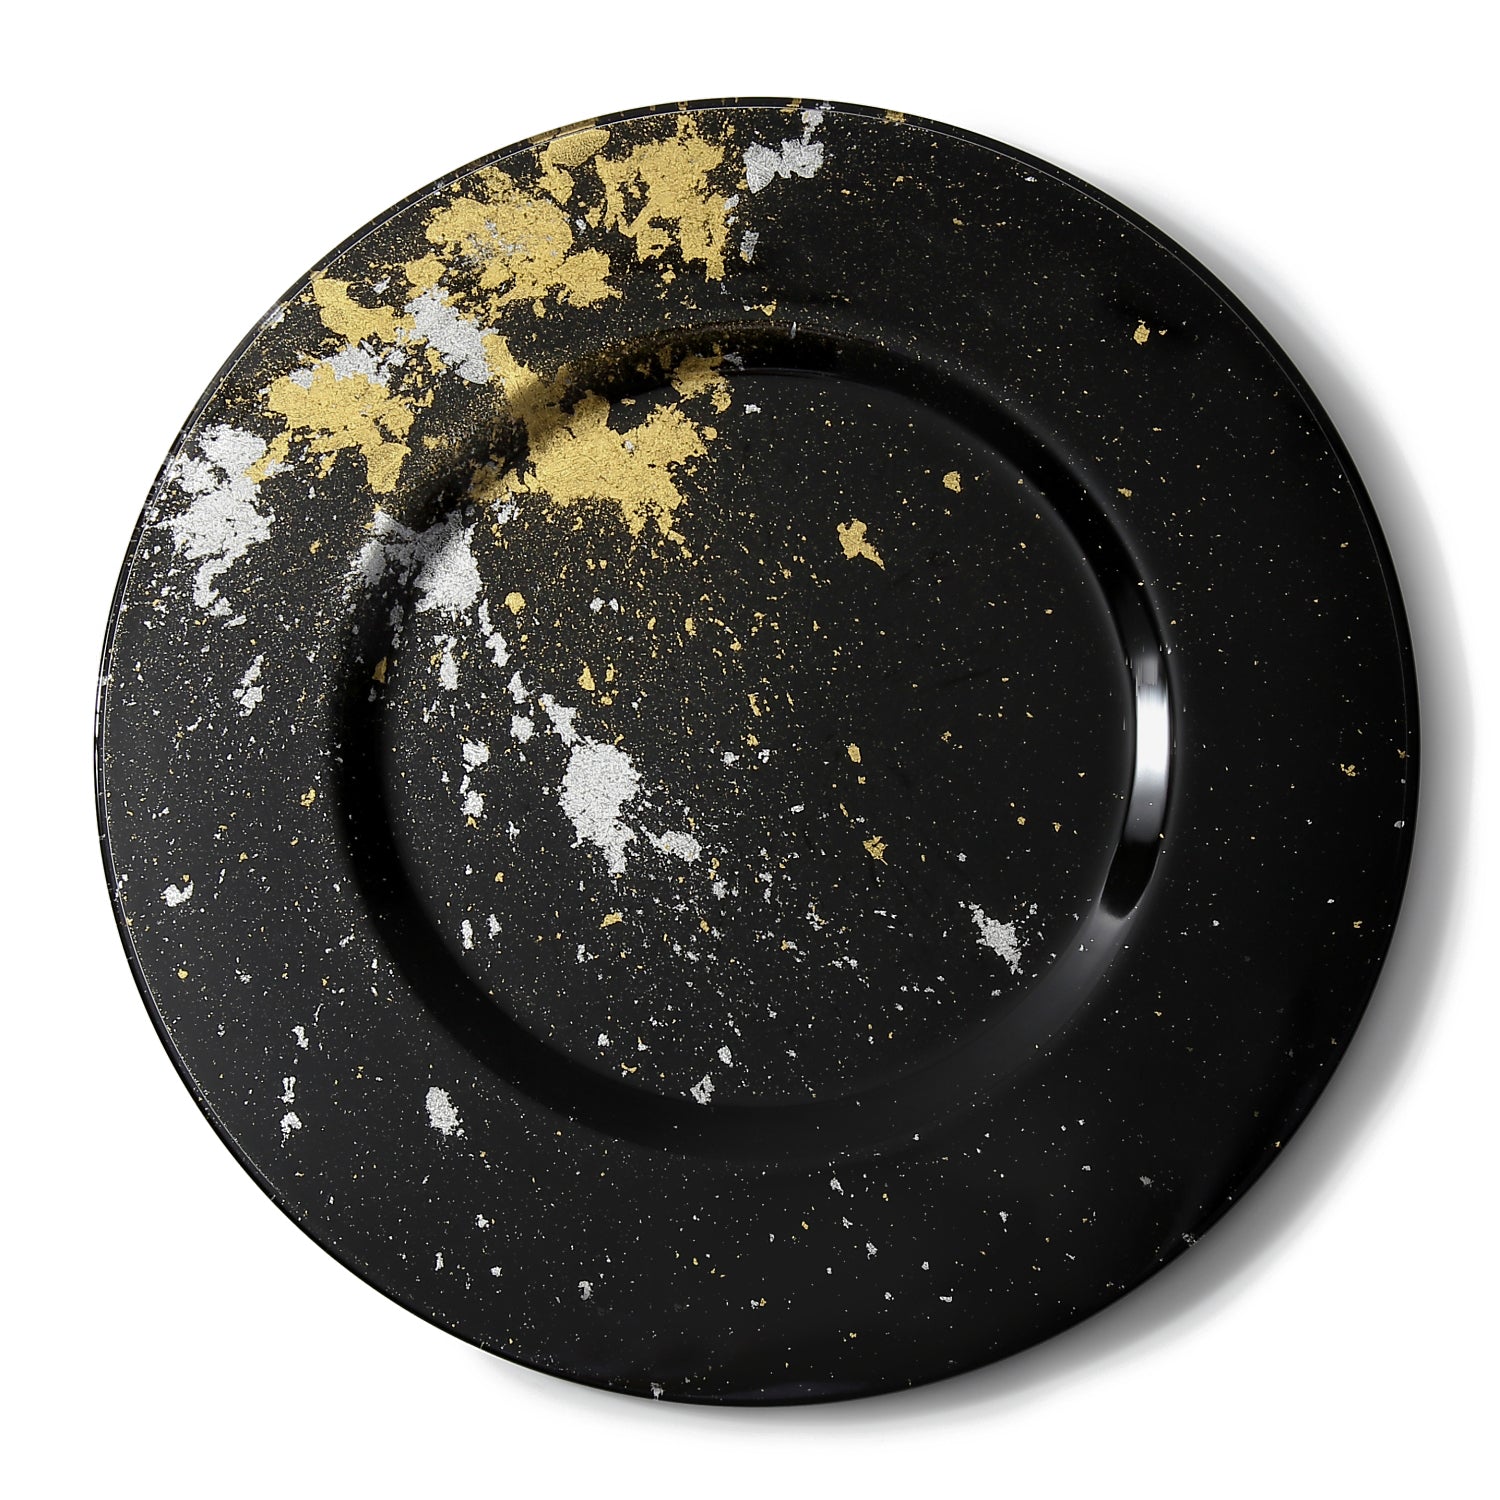 Syosaku Japanese Urushi Glass Charger Plate 13.9-inch (35cm) Jet Black with Gold Leaf, Dishwasher Safe